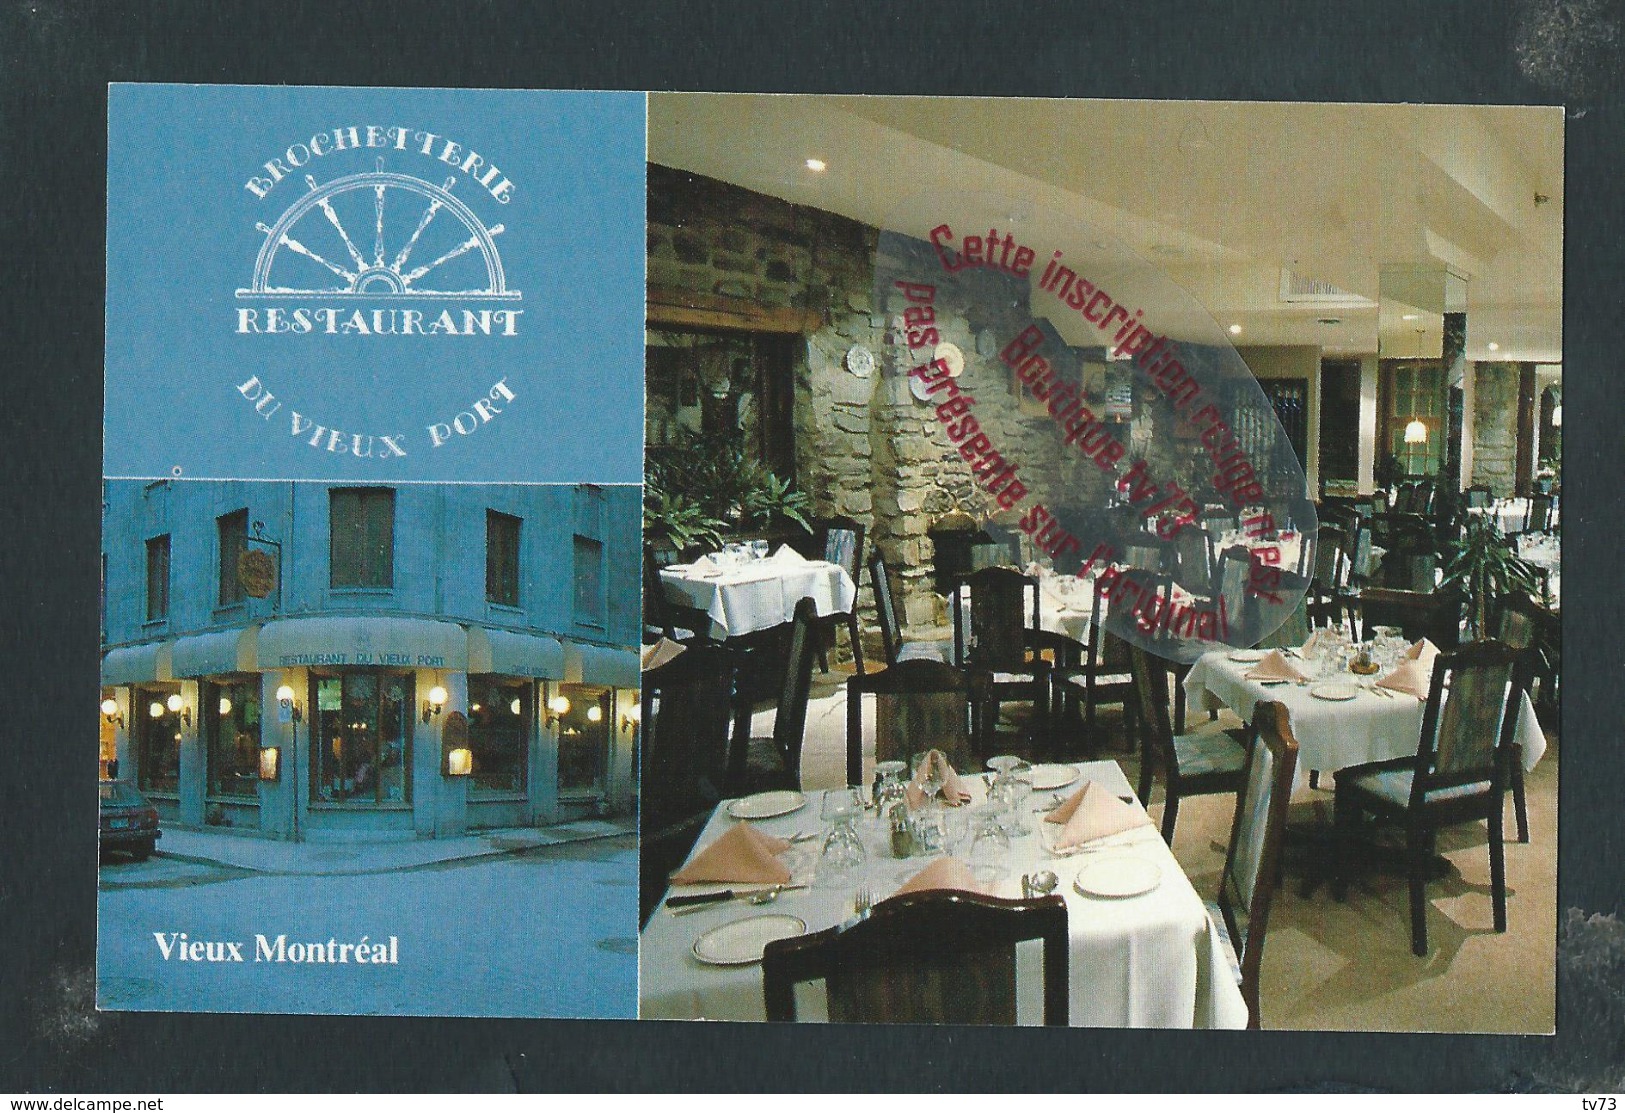 M1025 - MONTREAL Restaurant Du Vieux Port - Canada - Québec - La Citadelle